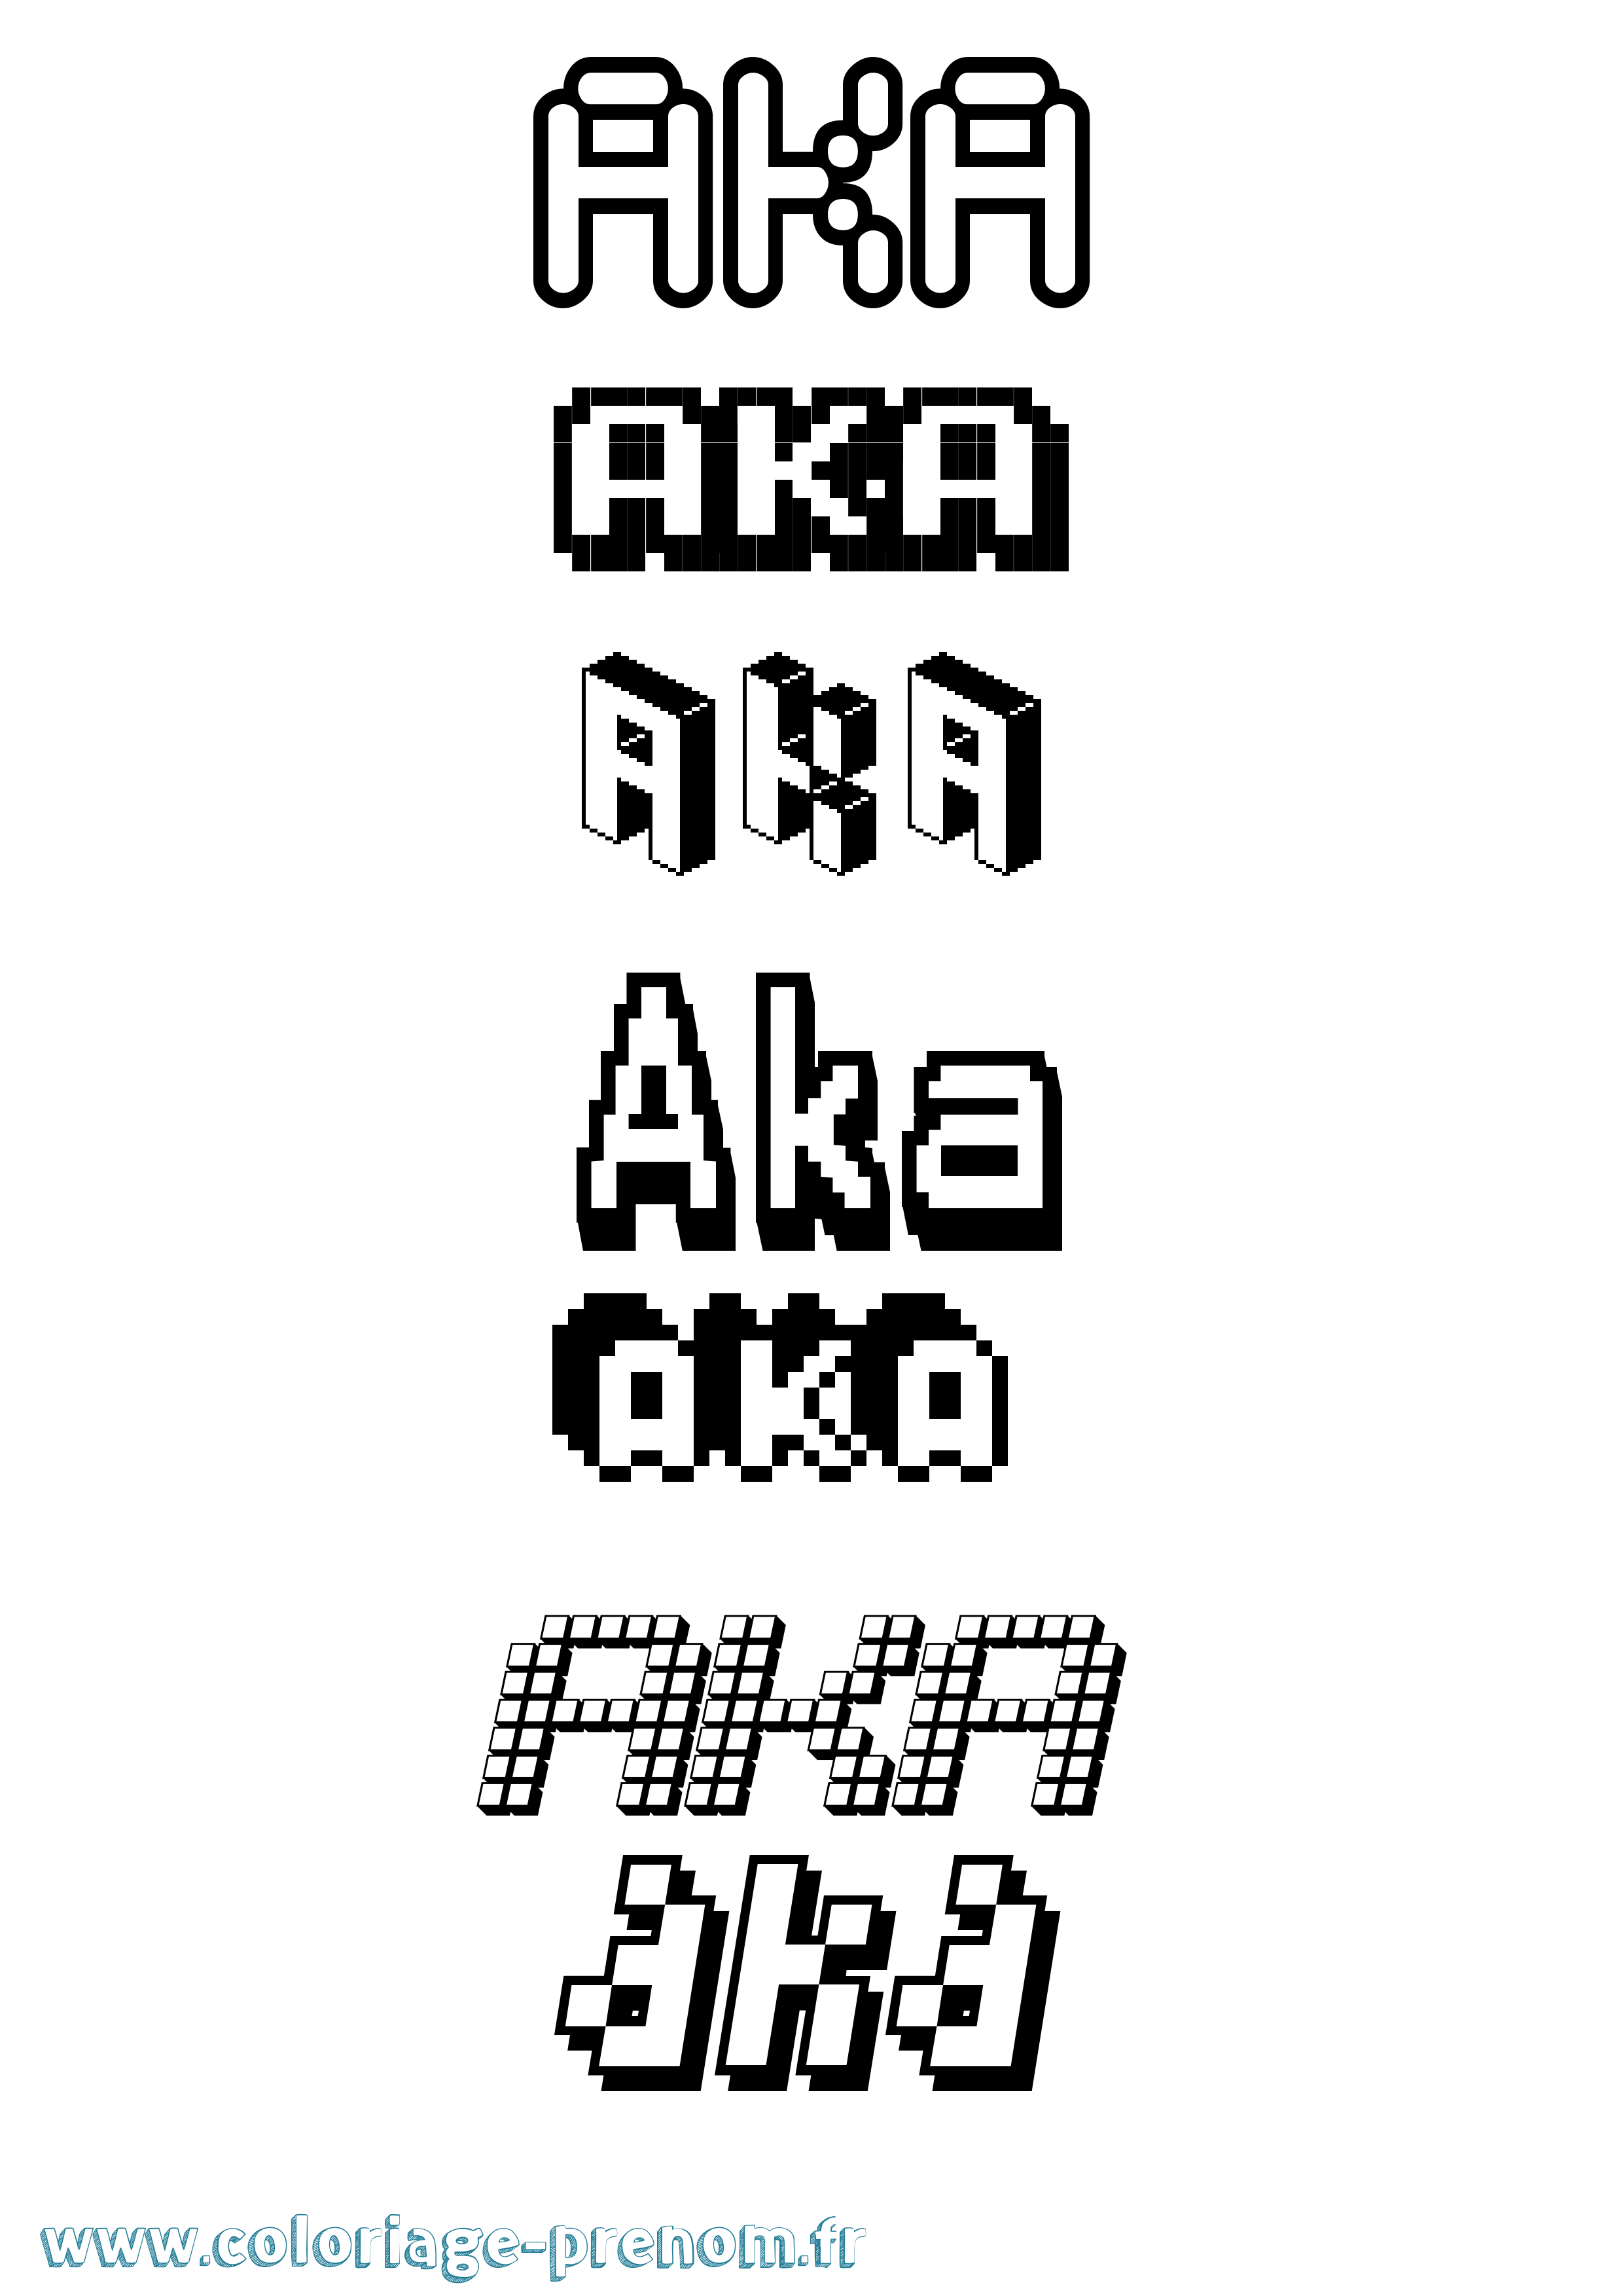 Coloriage prénom Aka Pixel